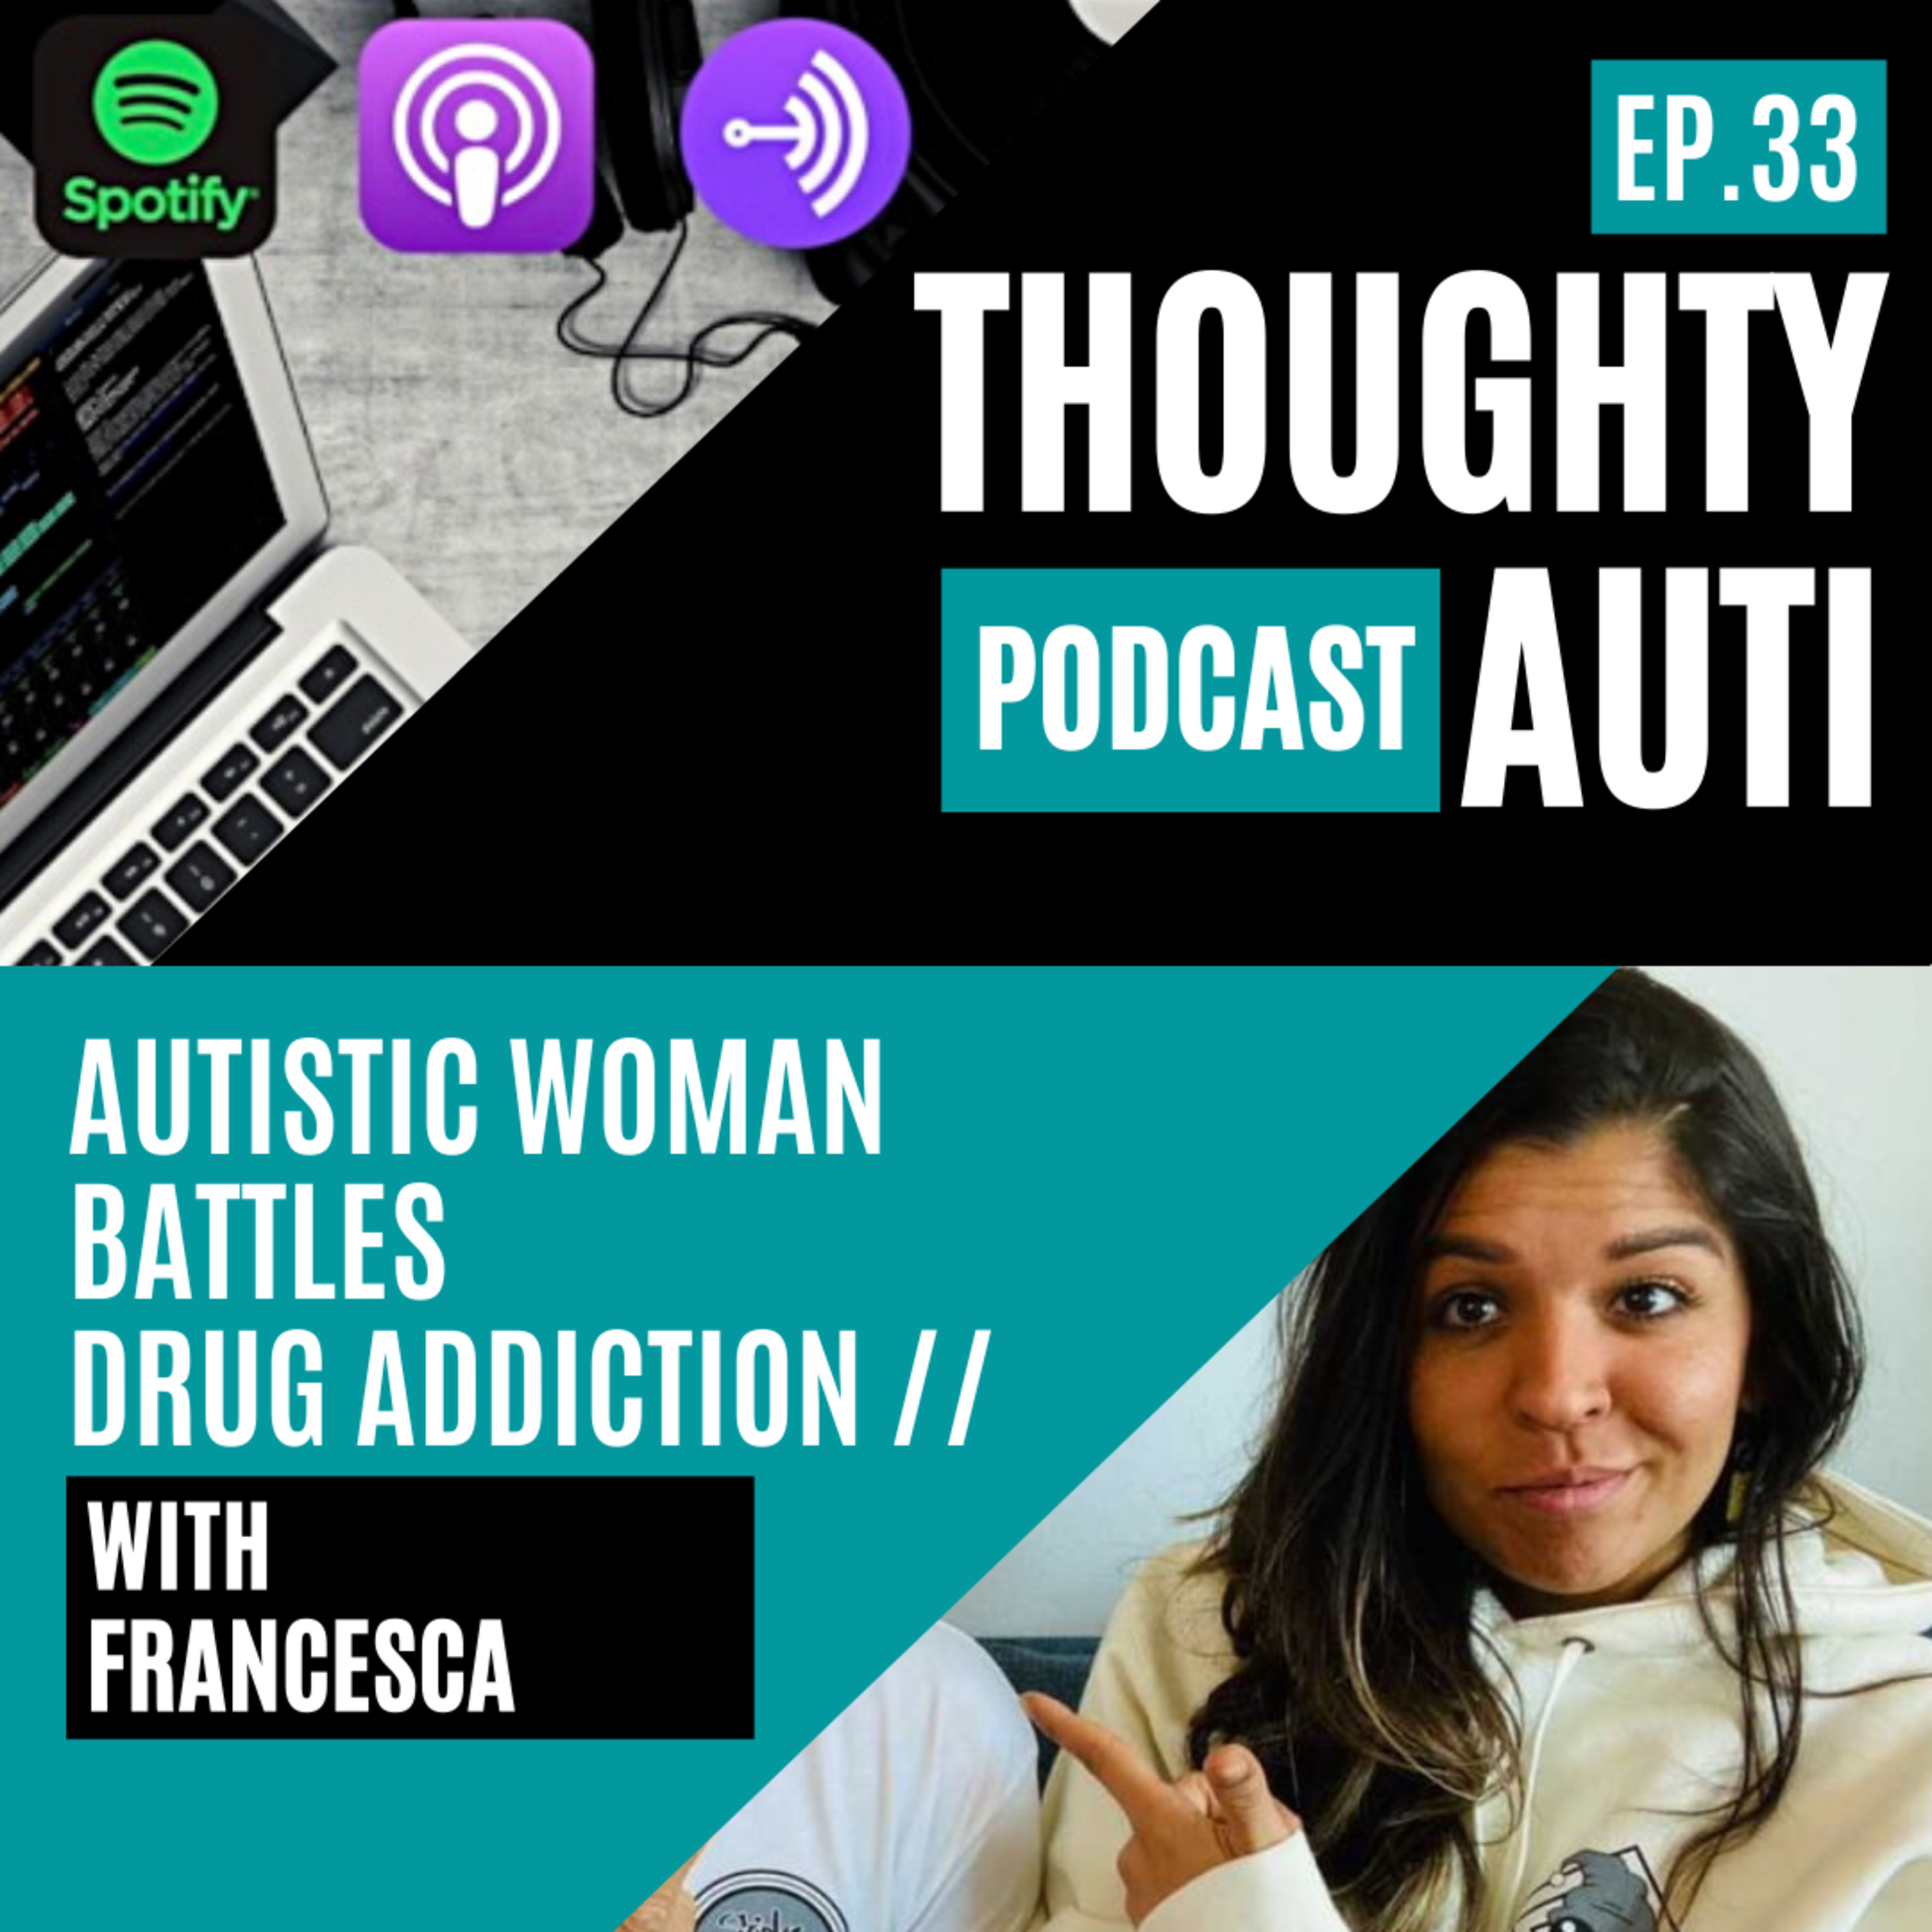 Battling Crystal Methamphetamine Addiction & Homelessness - One Autistic Woman's Journey w/ Neurodivergent FranchFries